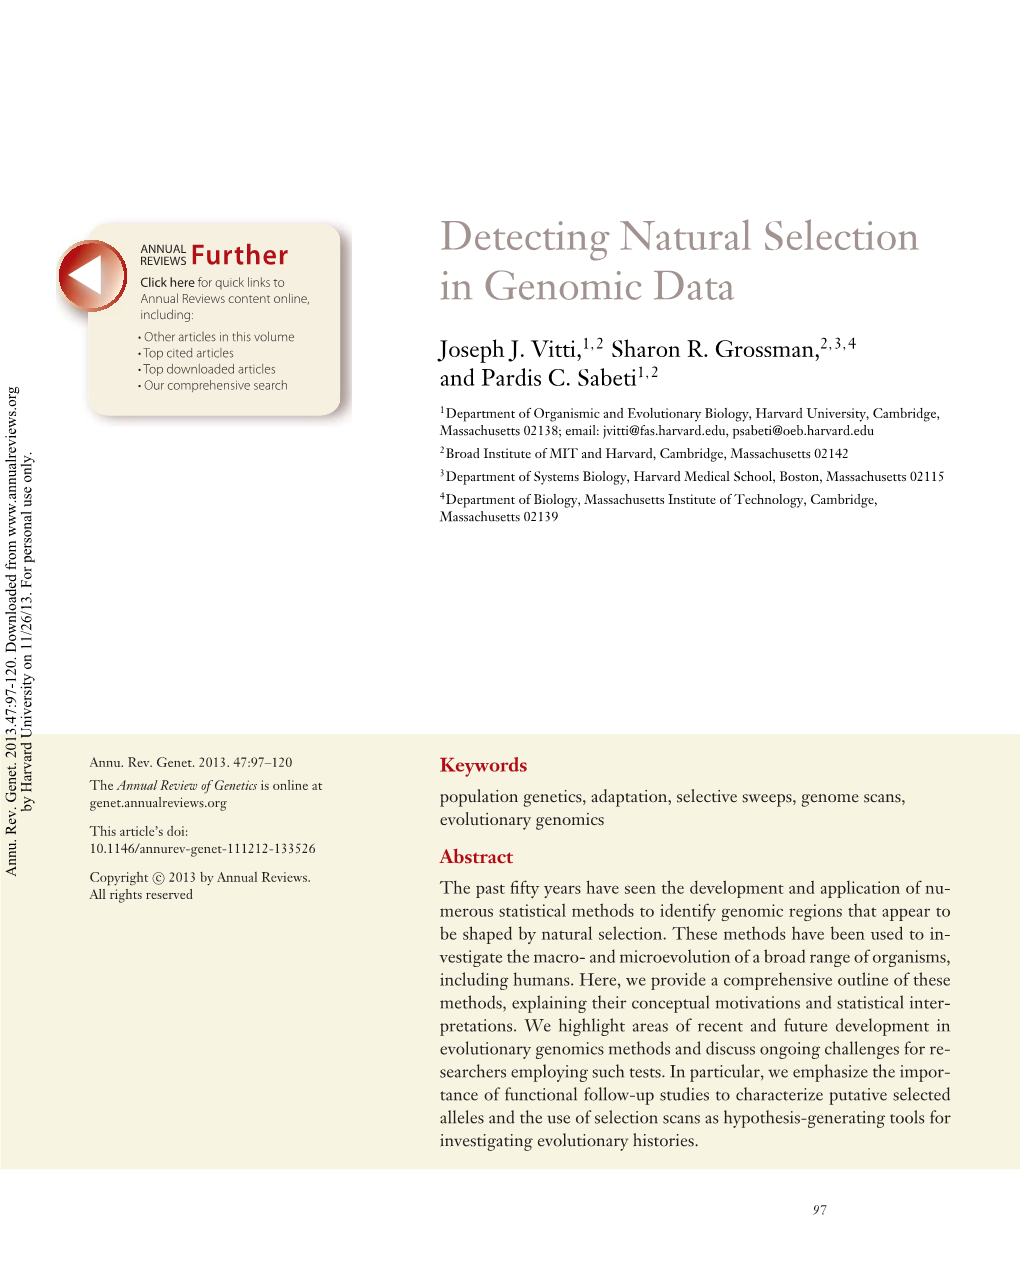 Detecting Natural Selection in Genomic Data